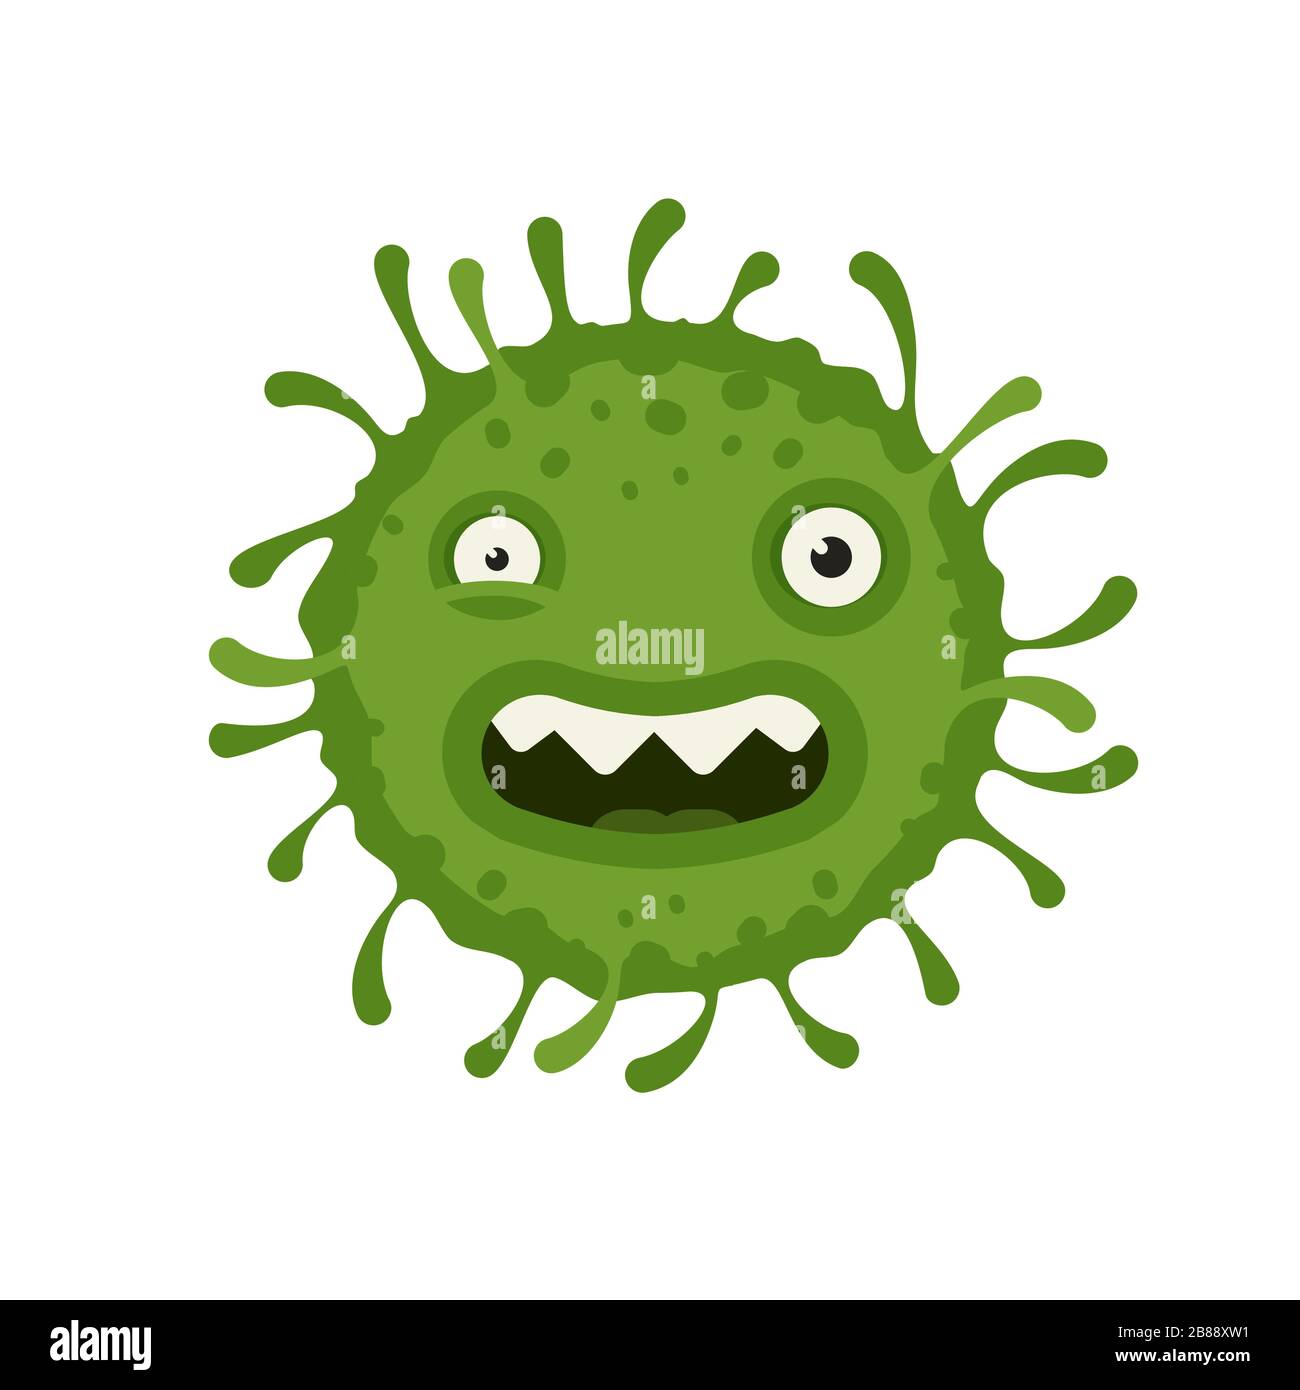 Coronavirus COVID 19. Viral pneumonia, disease vector illustration Stock Vector